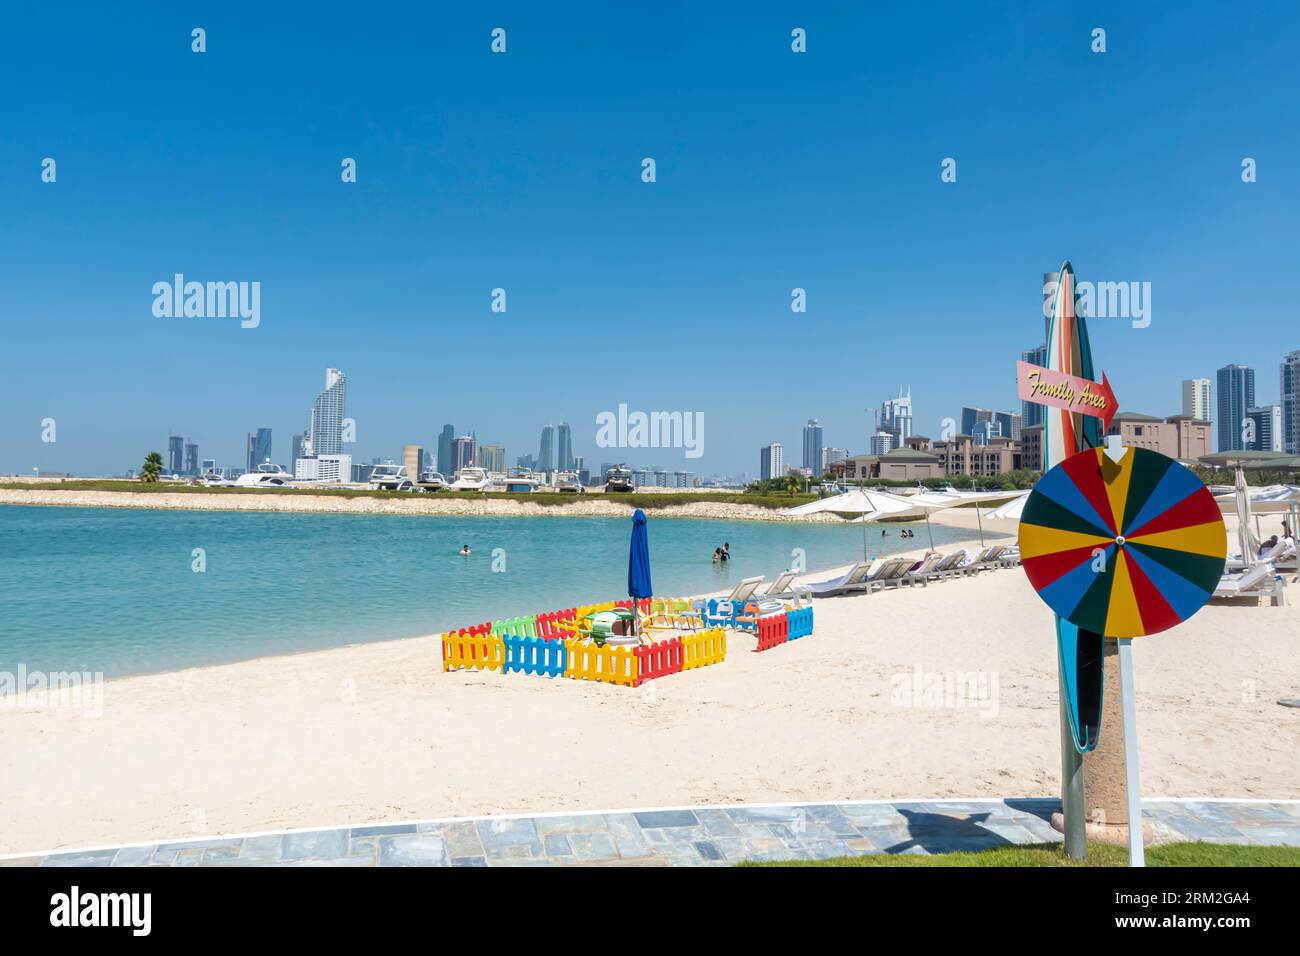 Family area at the beach in Bahrain Bay, Ritz Carlton hotel beach Stock Photo